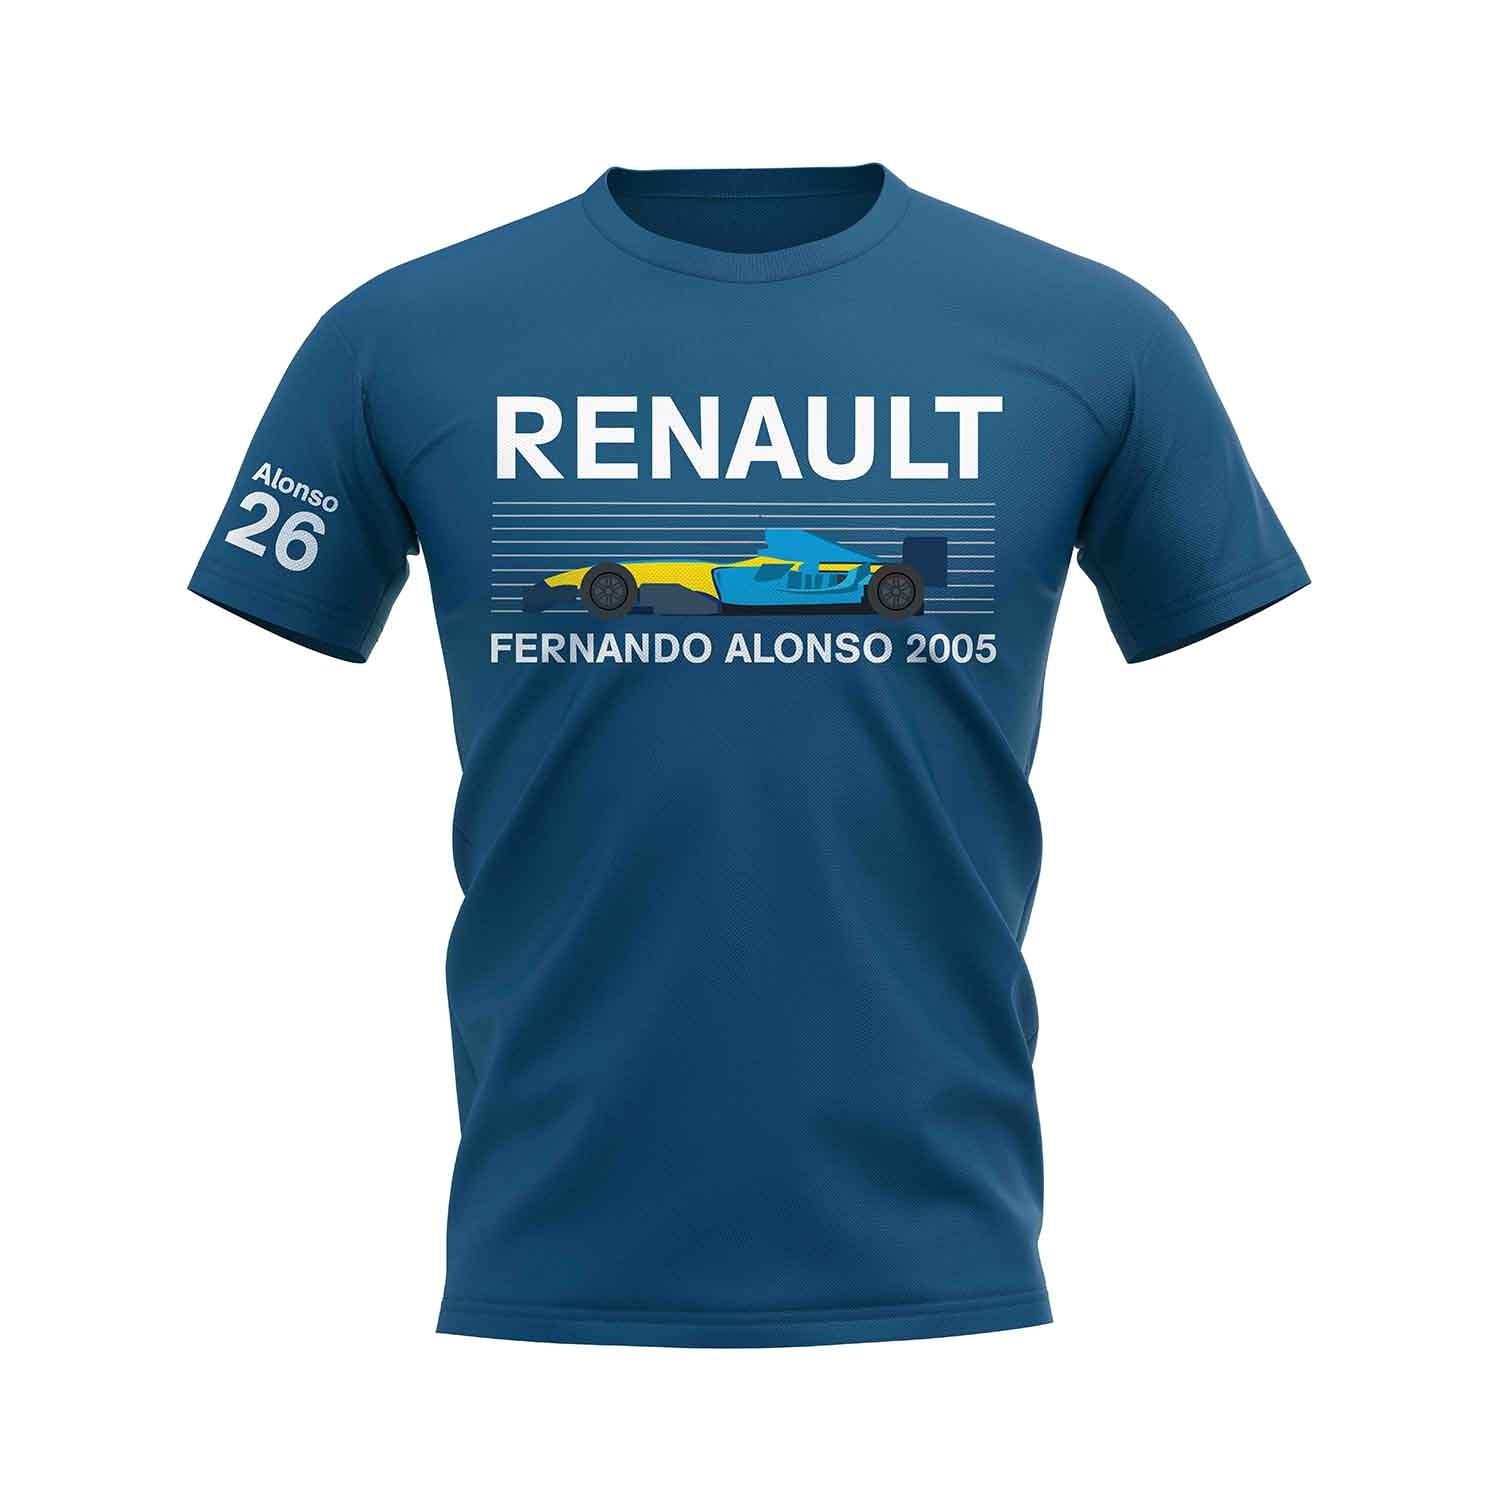 Fernando Alonso 2005 Renault T-Shirt (Blue)